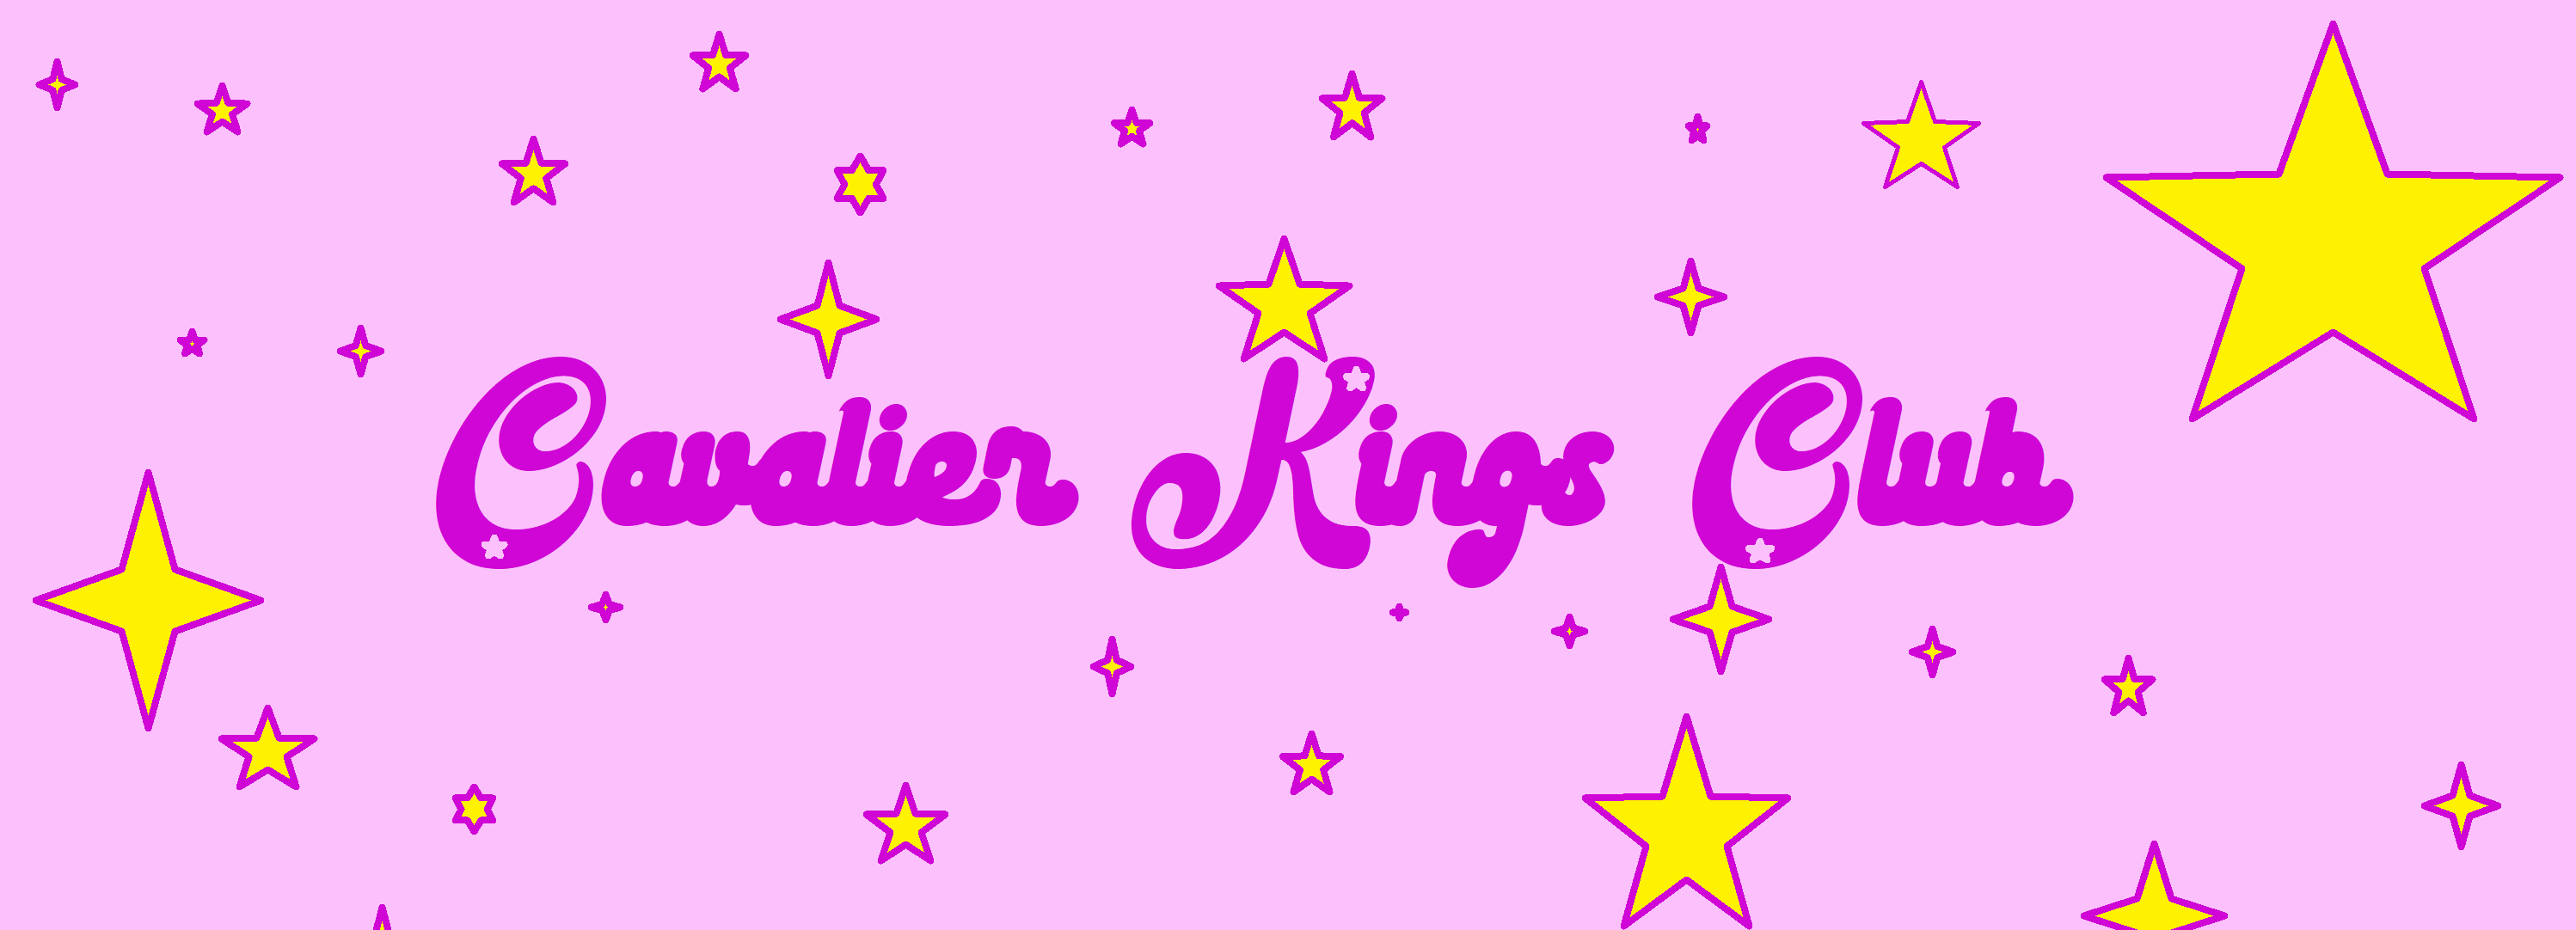 Cavalier Kings Club